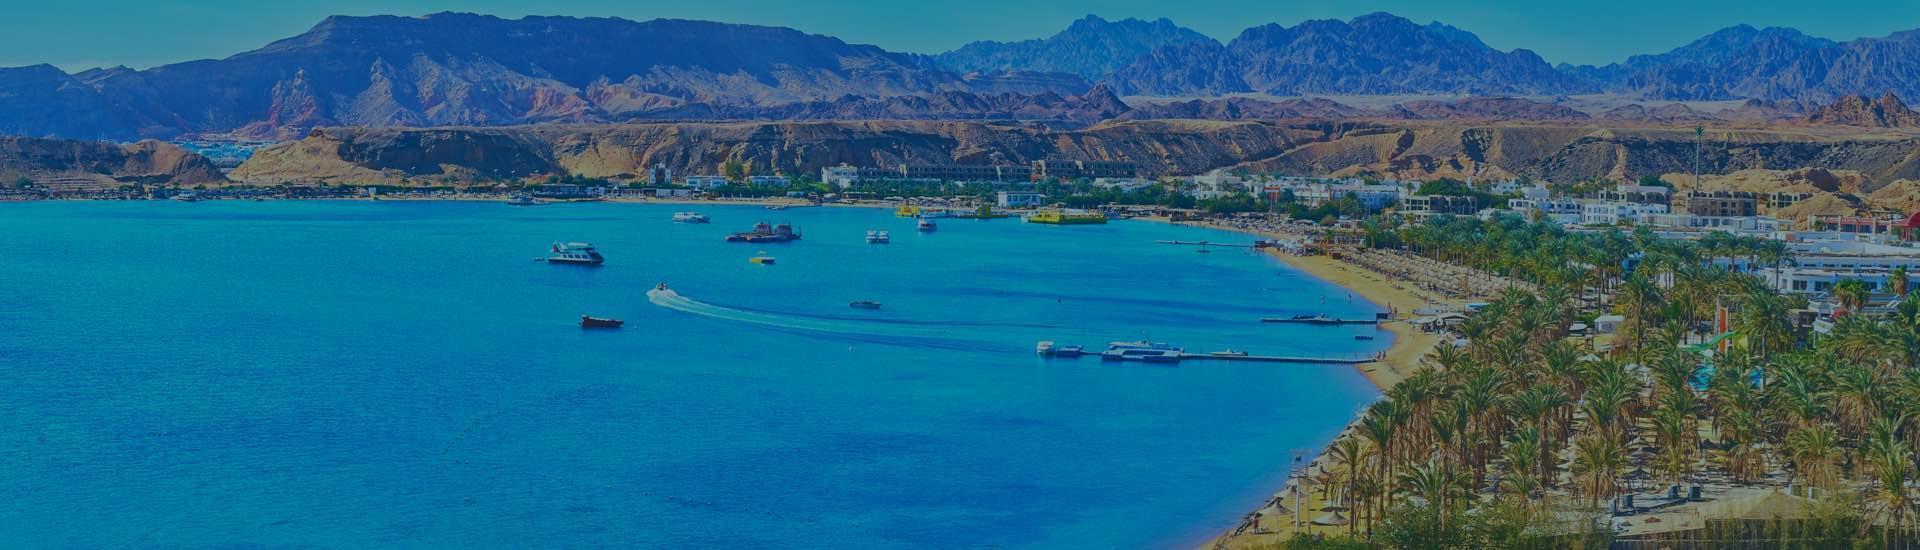 Book Malindi to Sharm El Sheikh Flights